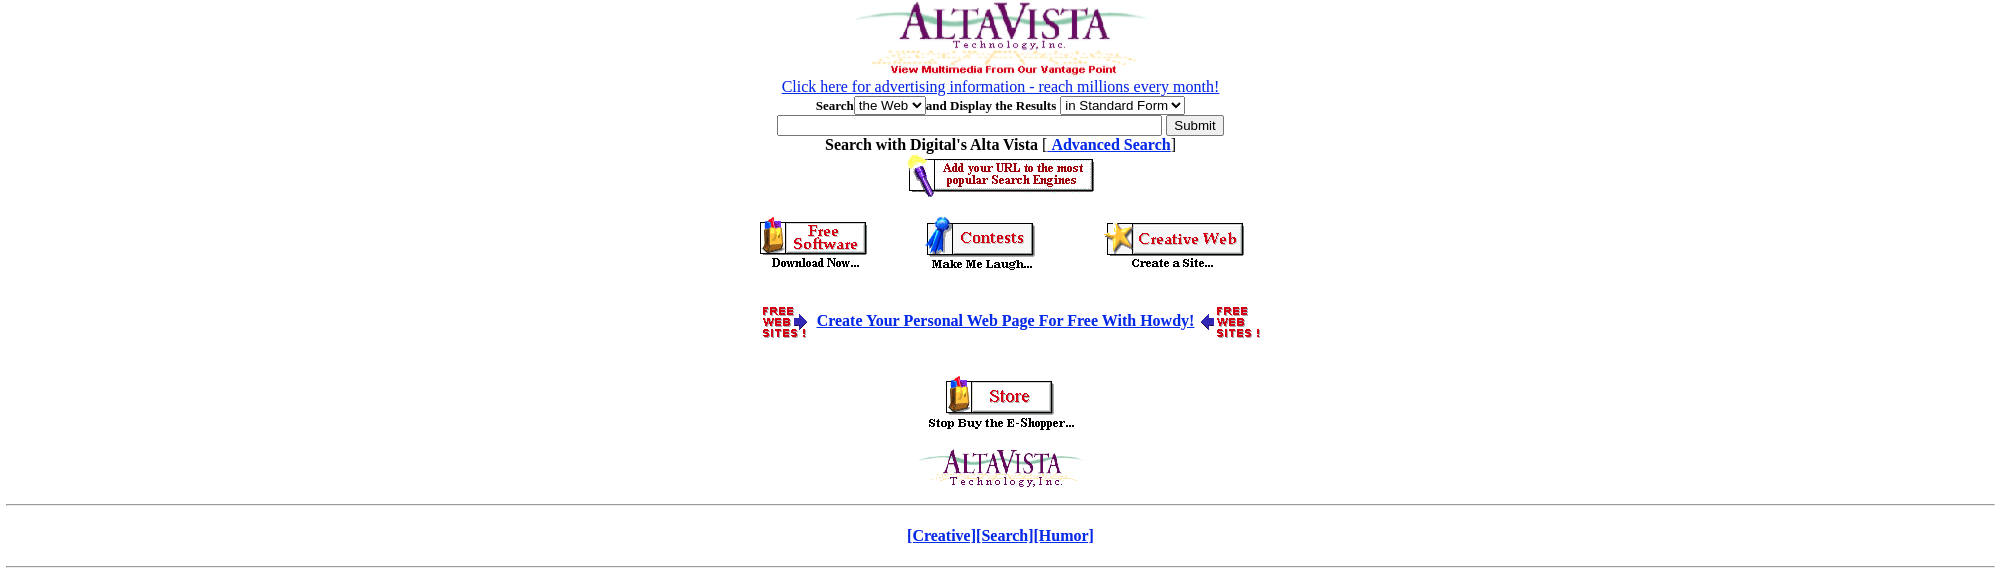 Altavista pre-2000